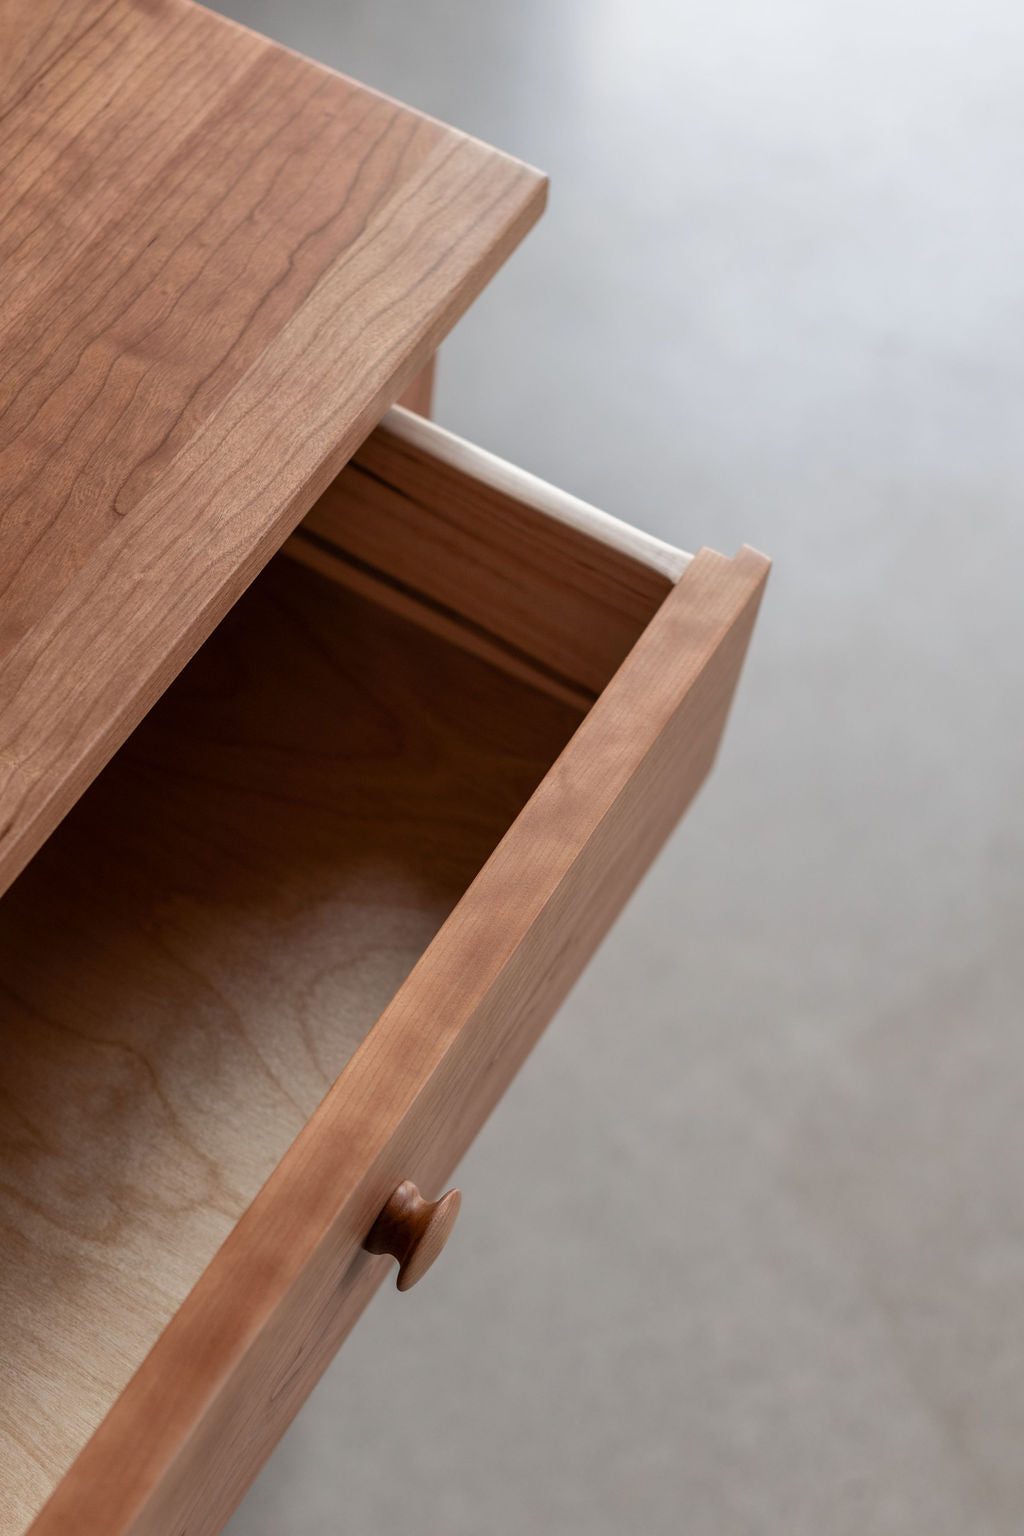 Open drawer of the Bethel Shaker Nightstand in cherry wood